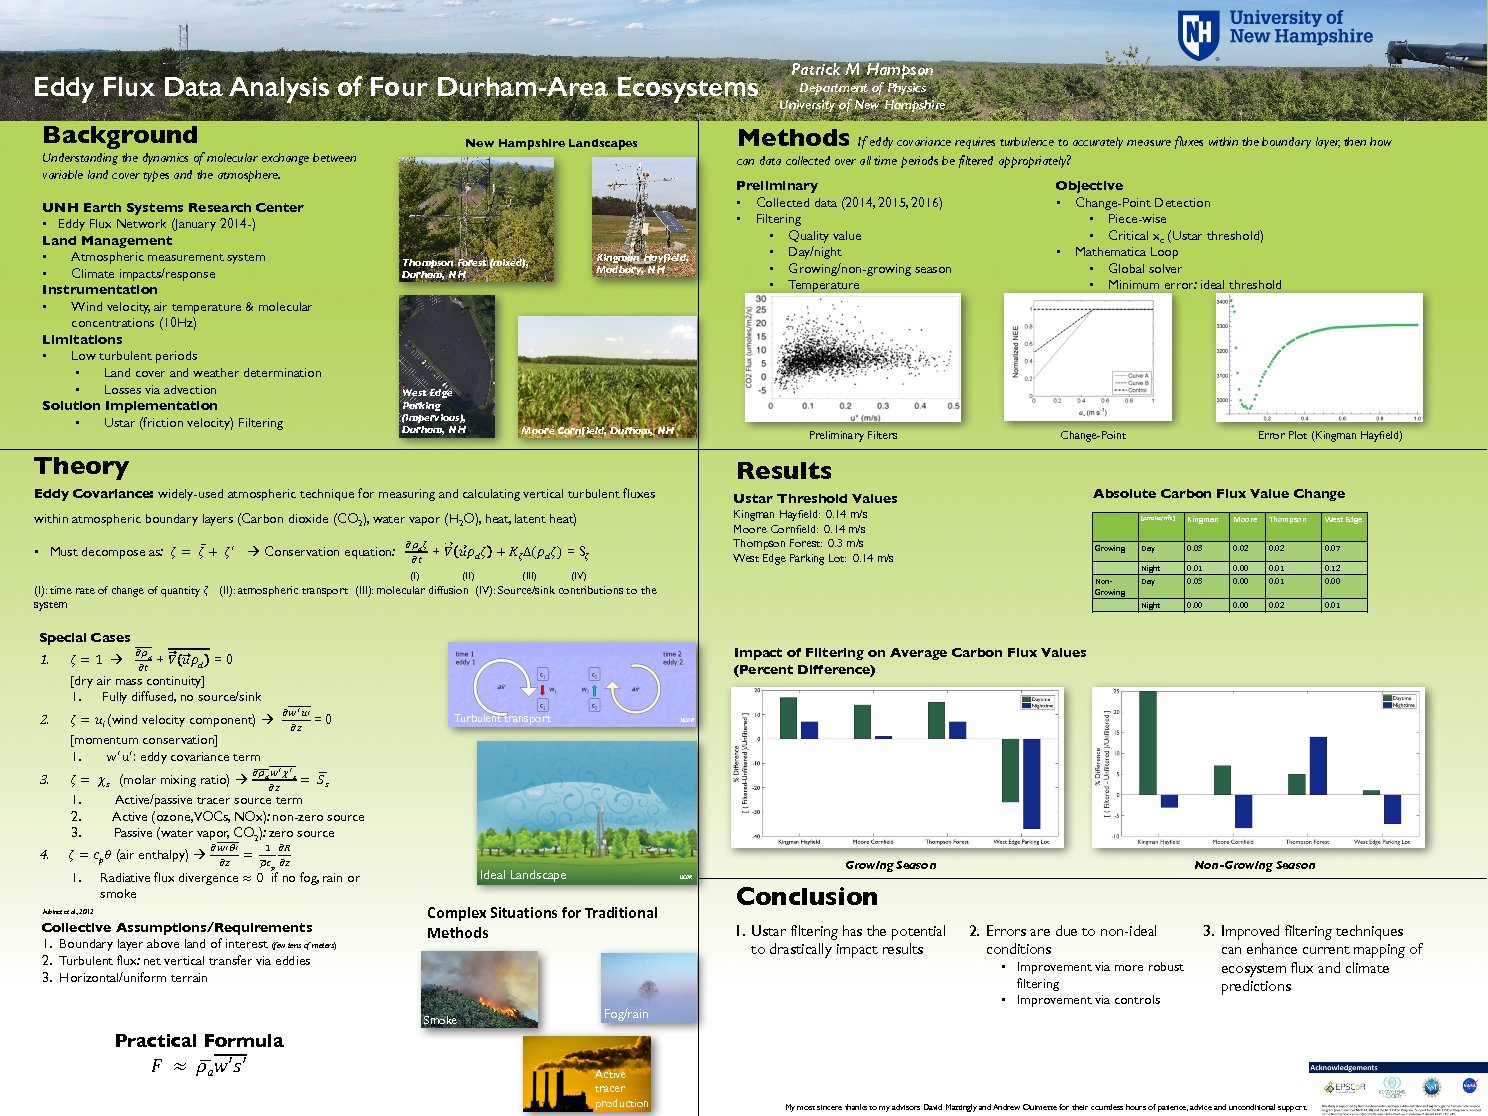 Eddy Flux Data Analysis Of Four Durham-Area Ecosystems by pma57